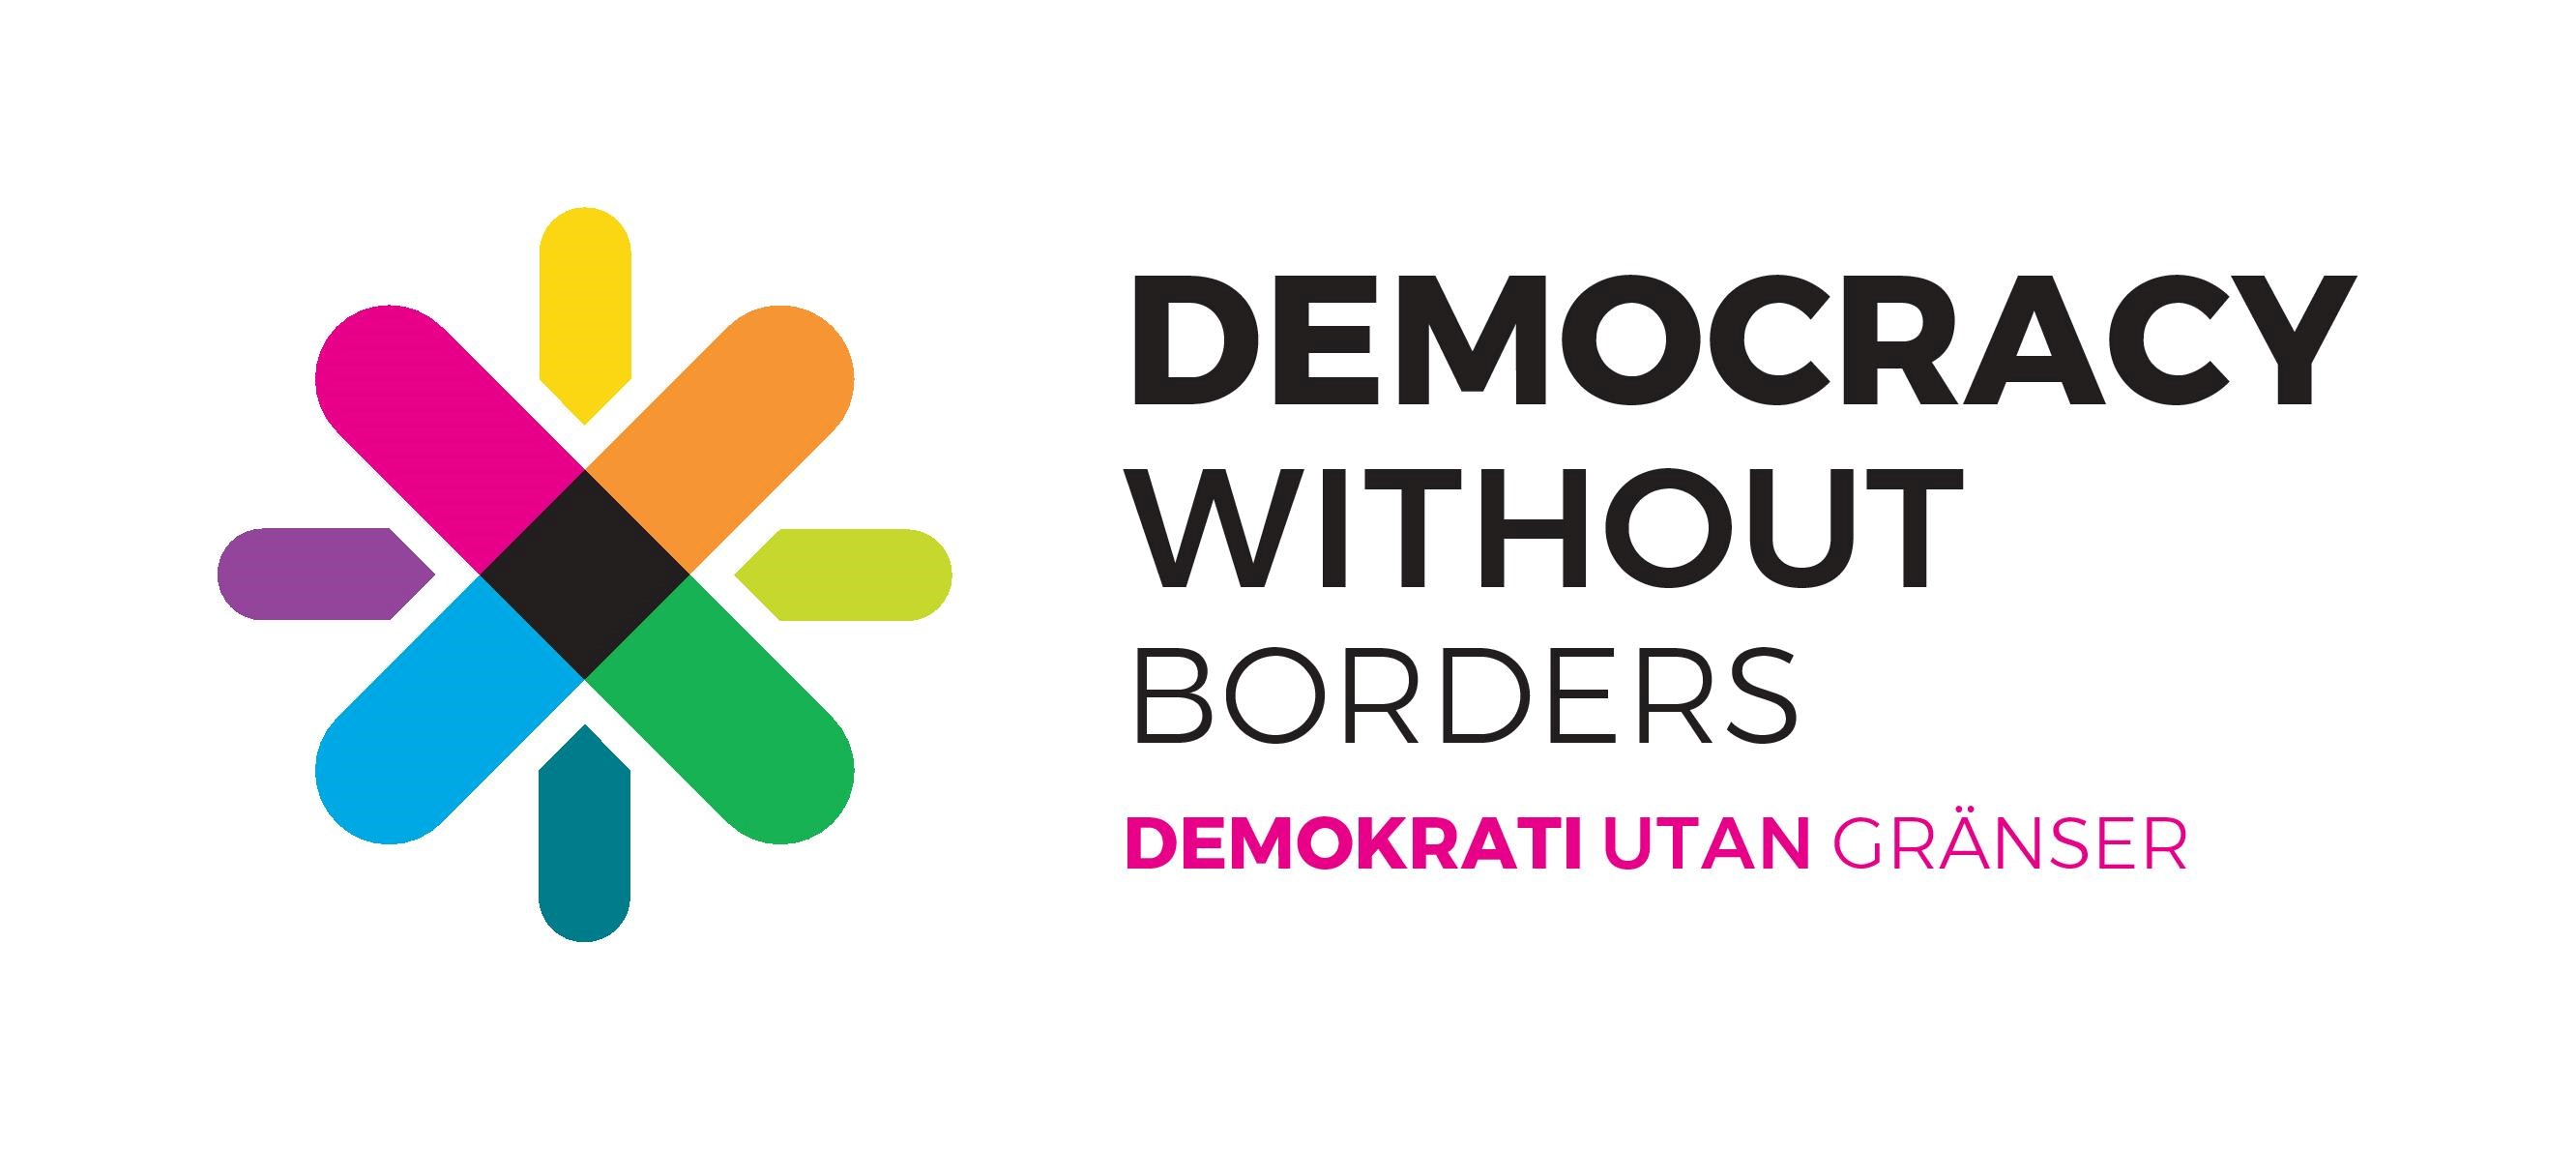 Demokrati utan gränser logo